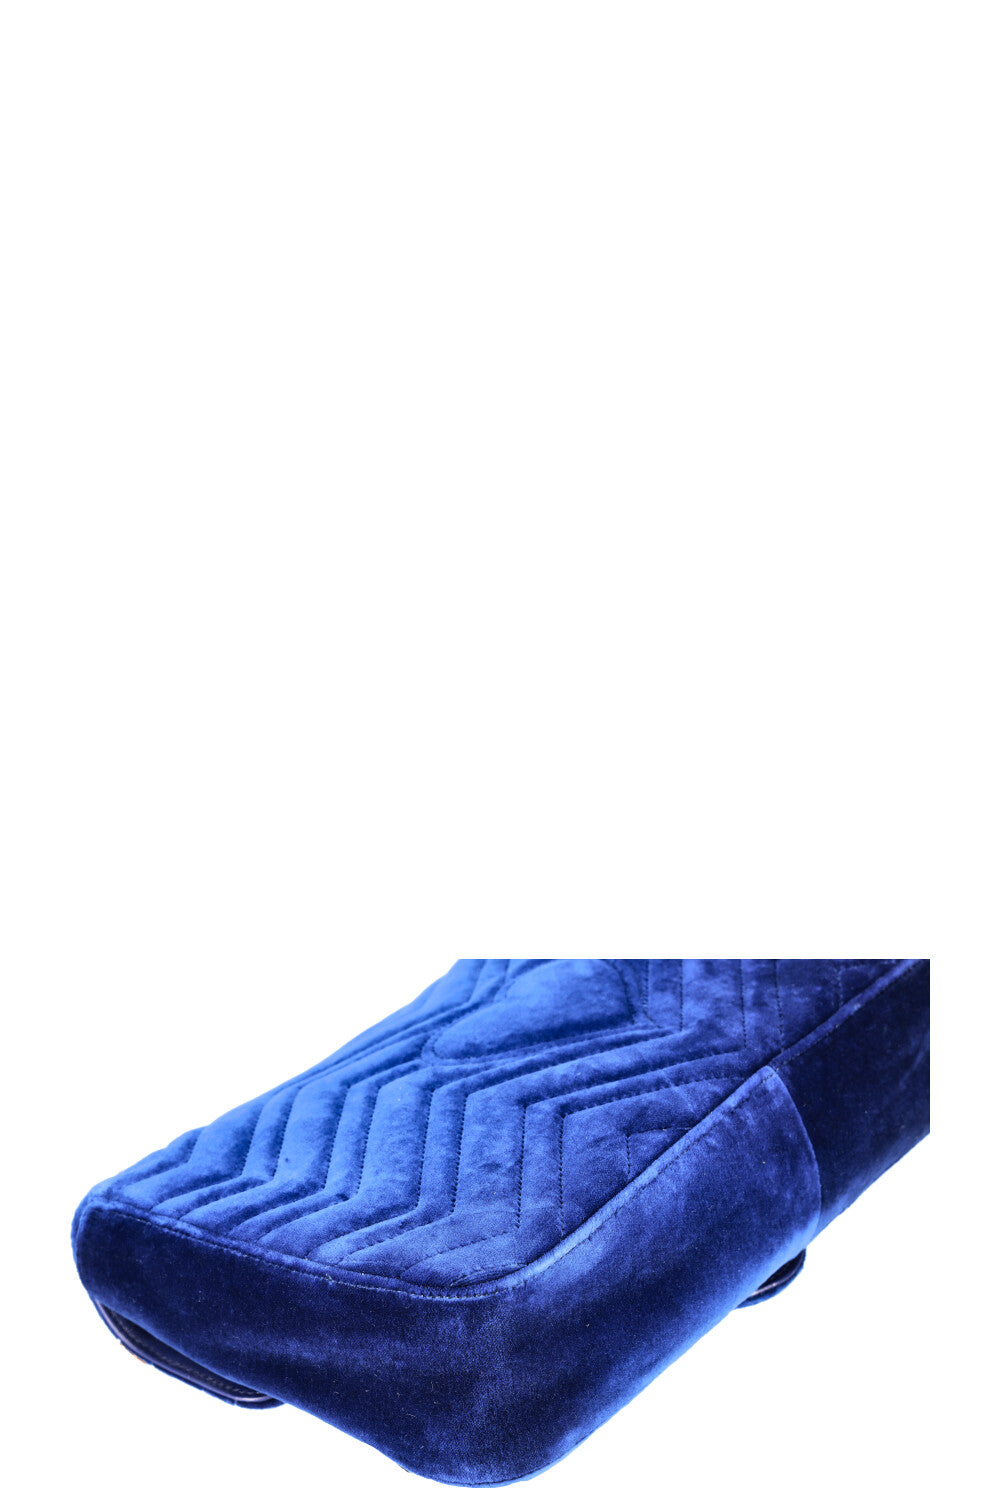 GUCCI Marmont Bag Medium Velvet  Blue